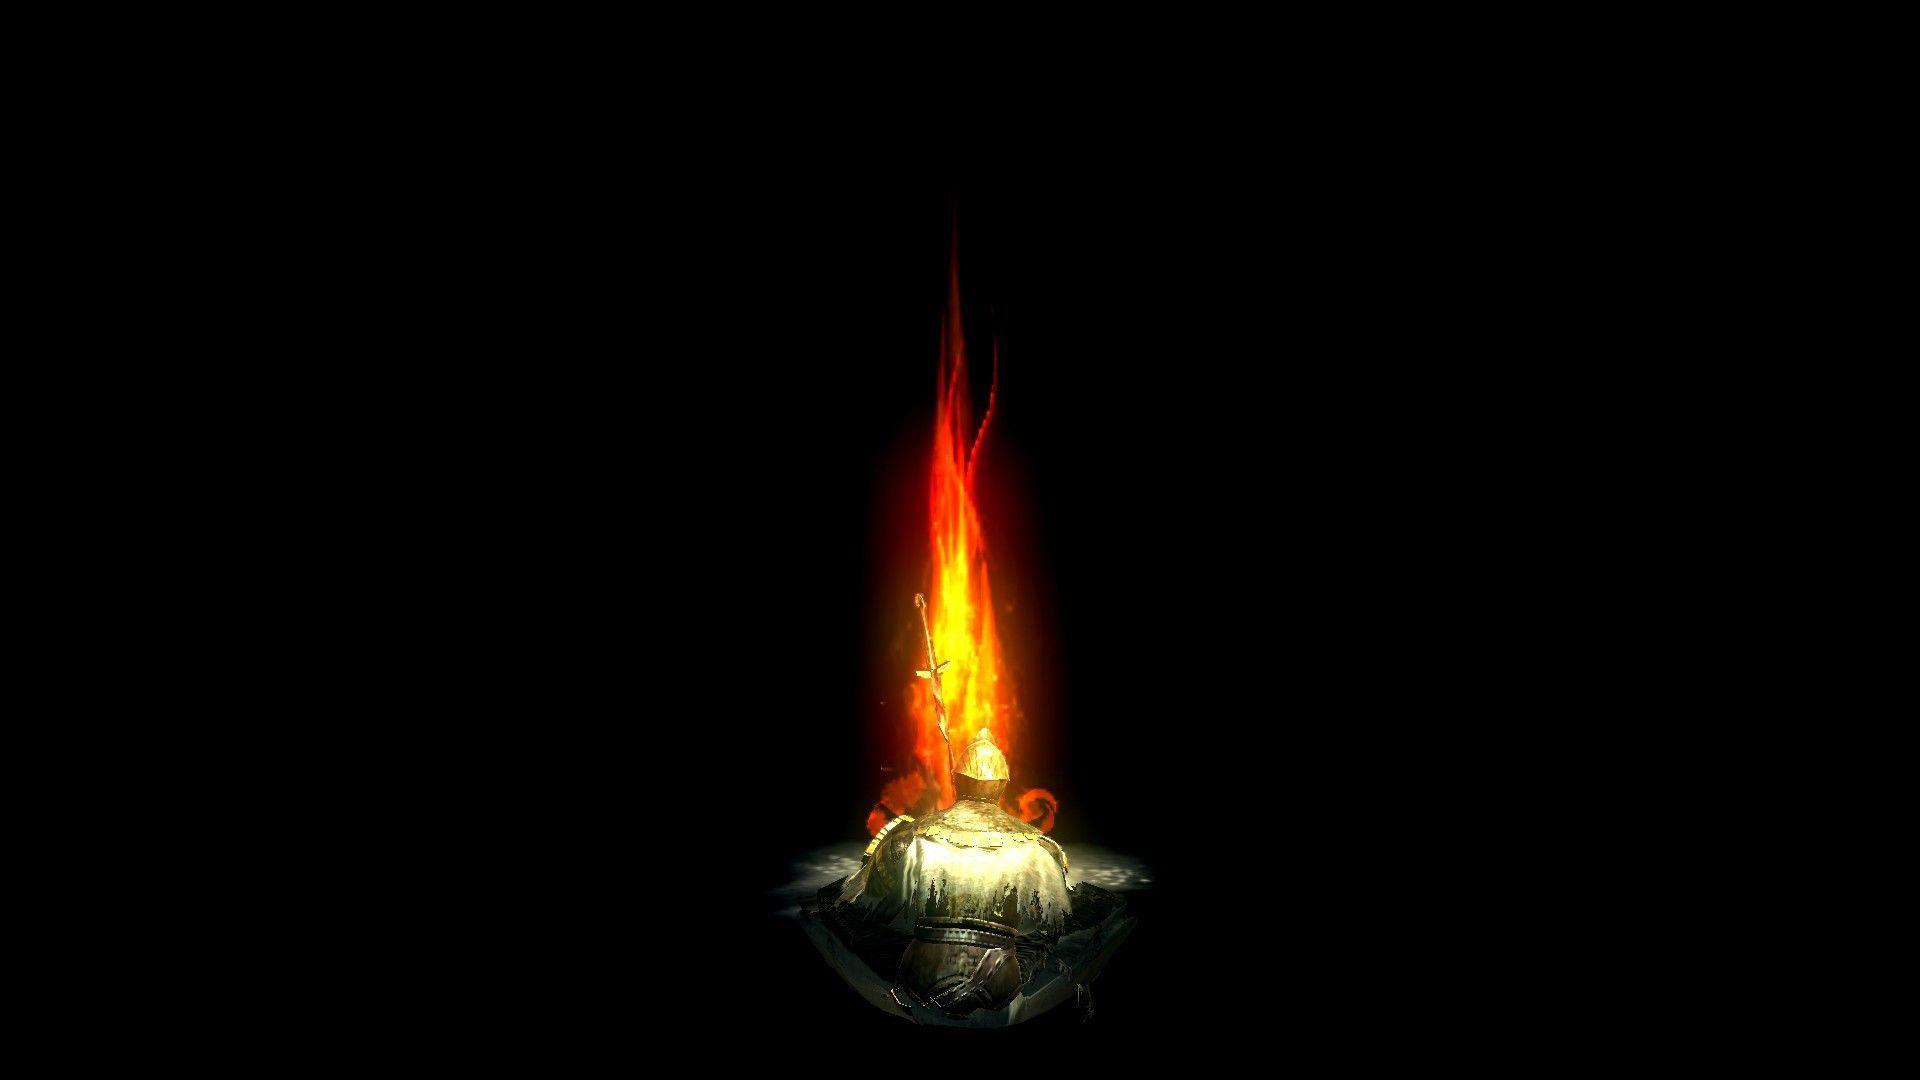 Dark Souls Bonfire Iphone Wallpapers Top Free Dark Souls Bonfire